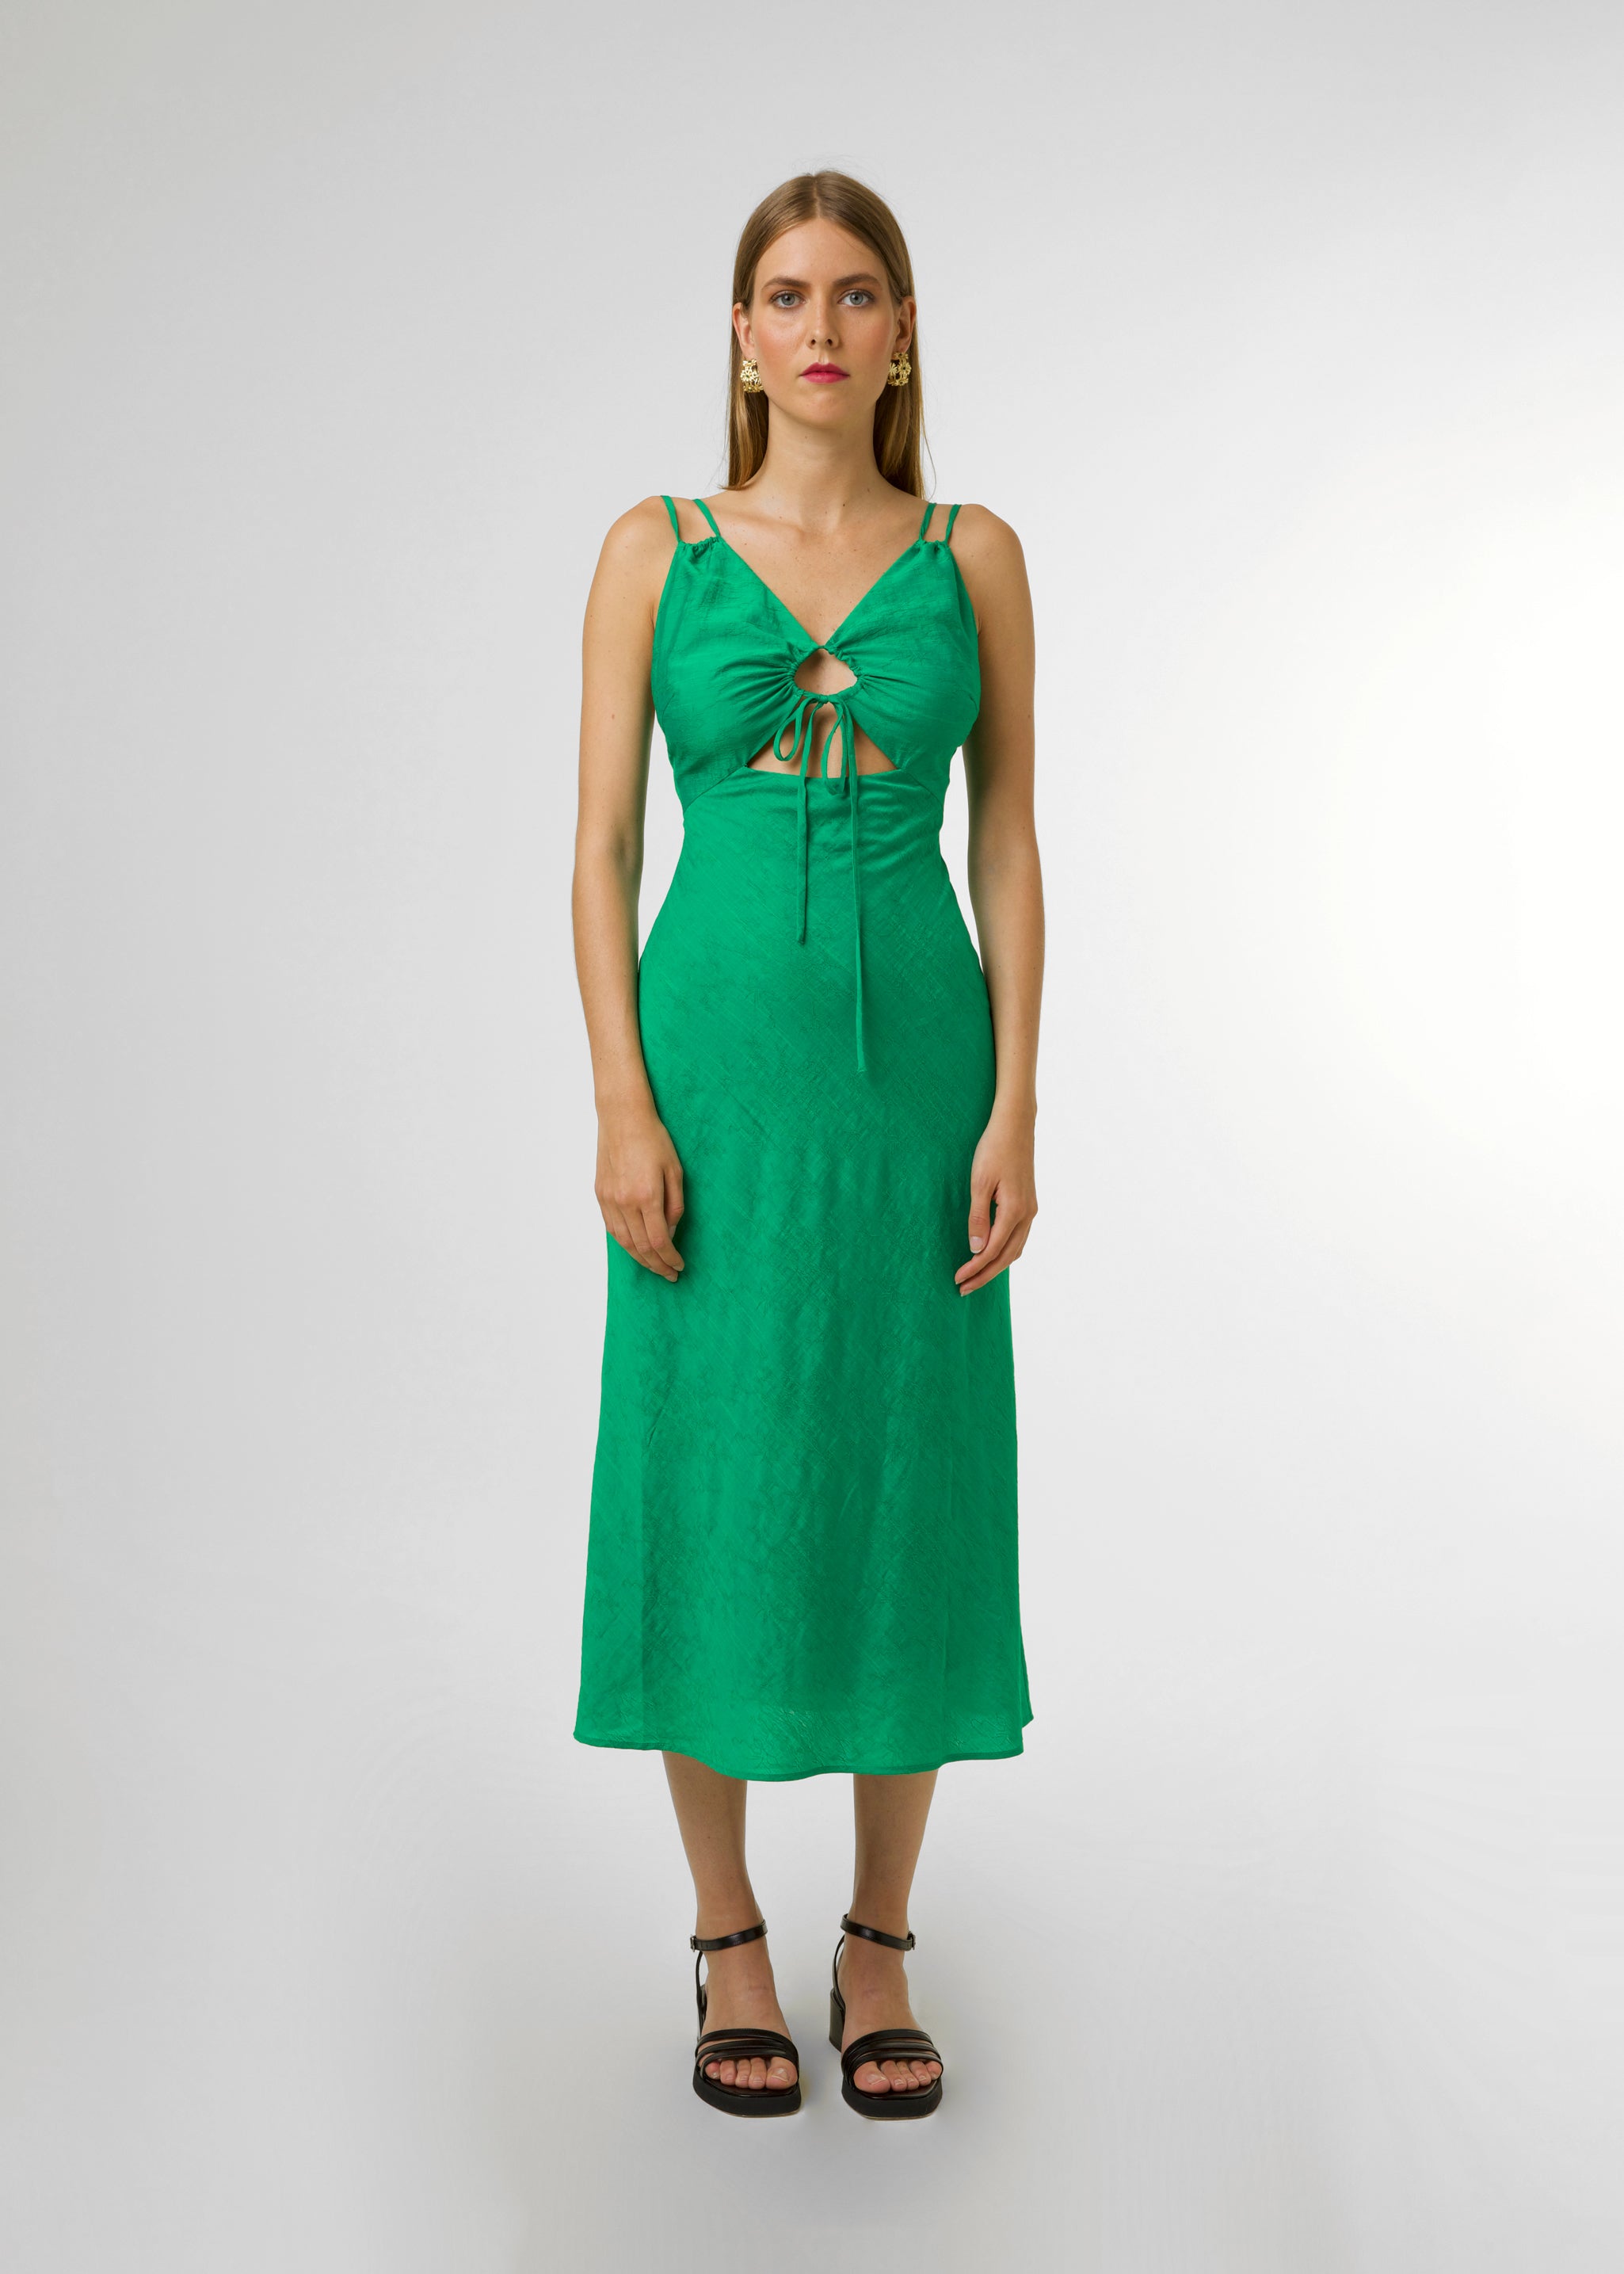 CEM Emerald dress